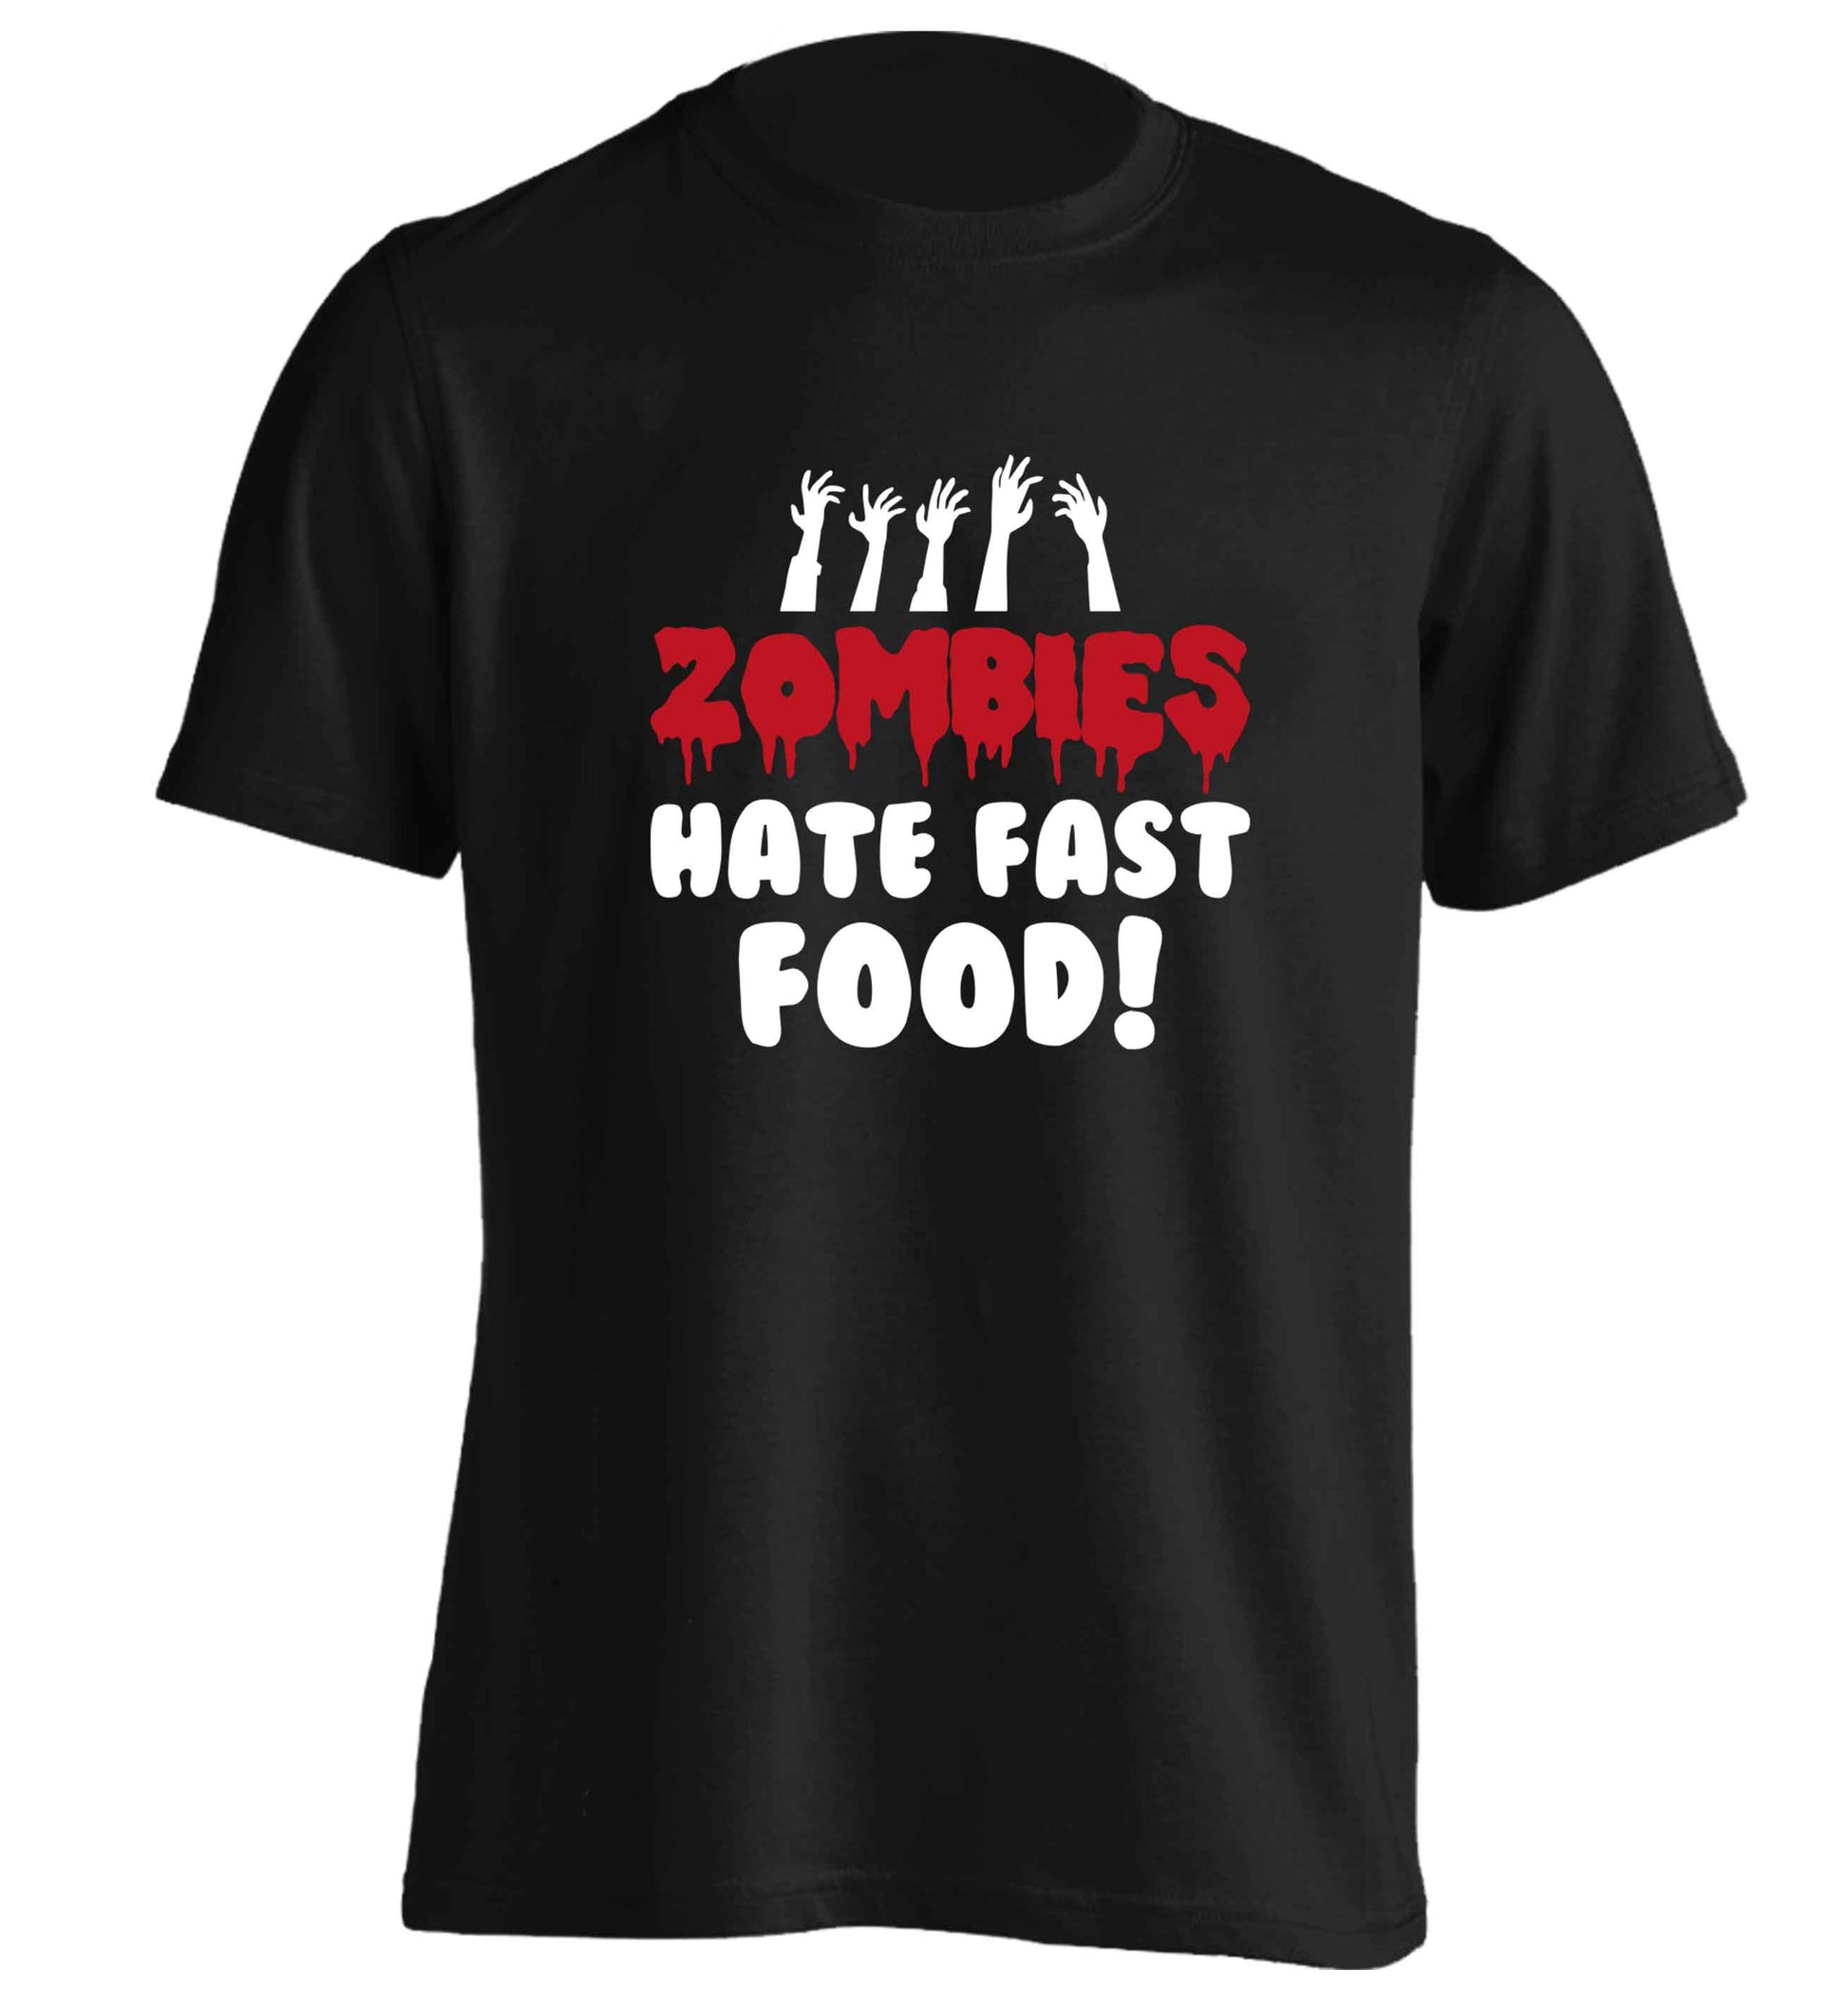 Zombies hate fast food adults unisex black Tshirt 2XL